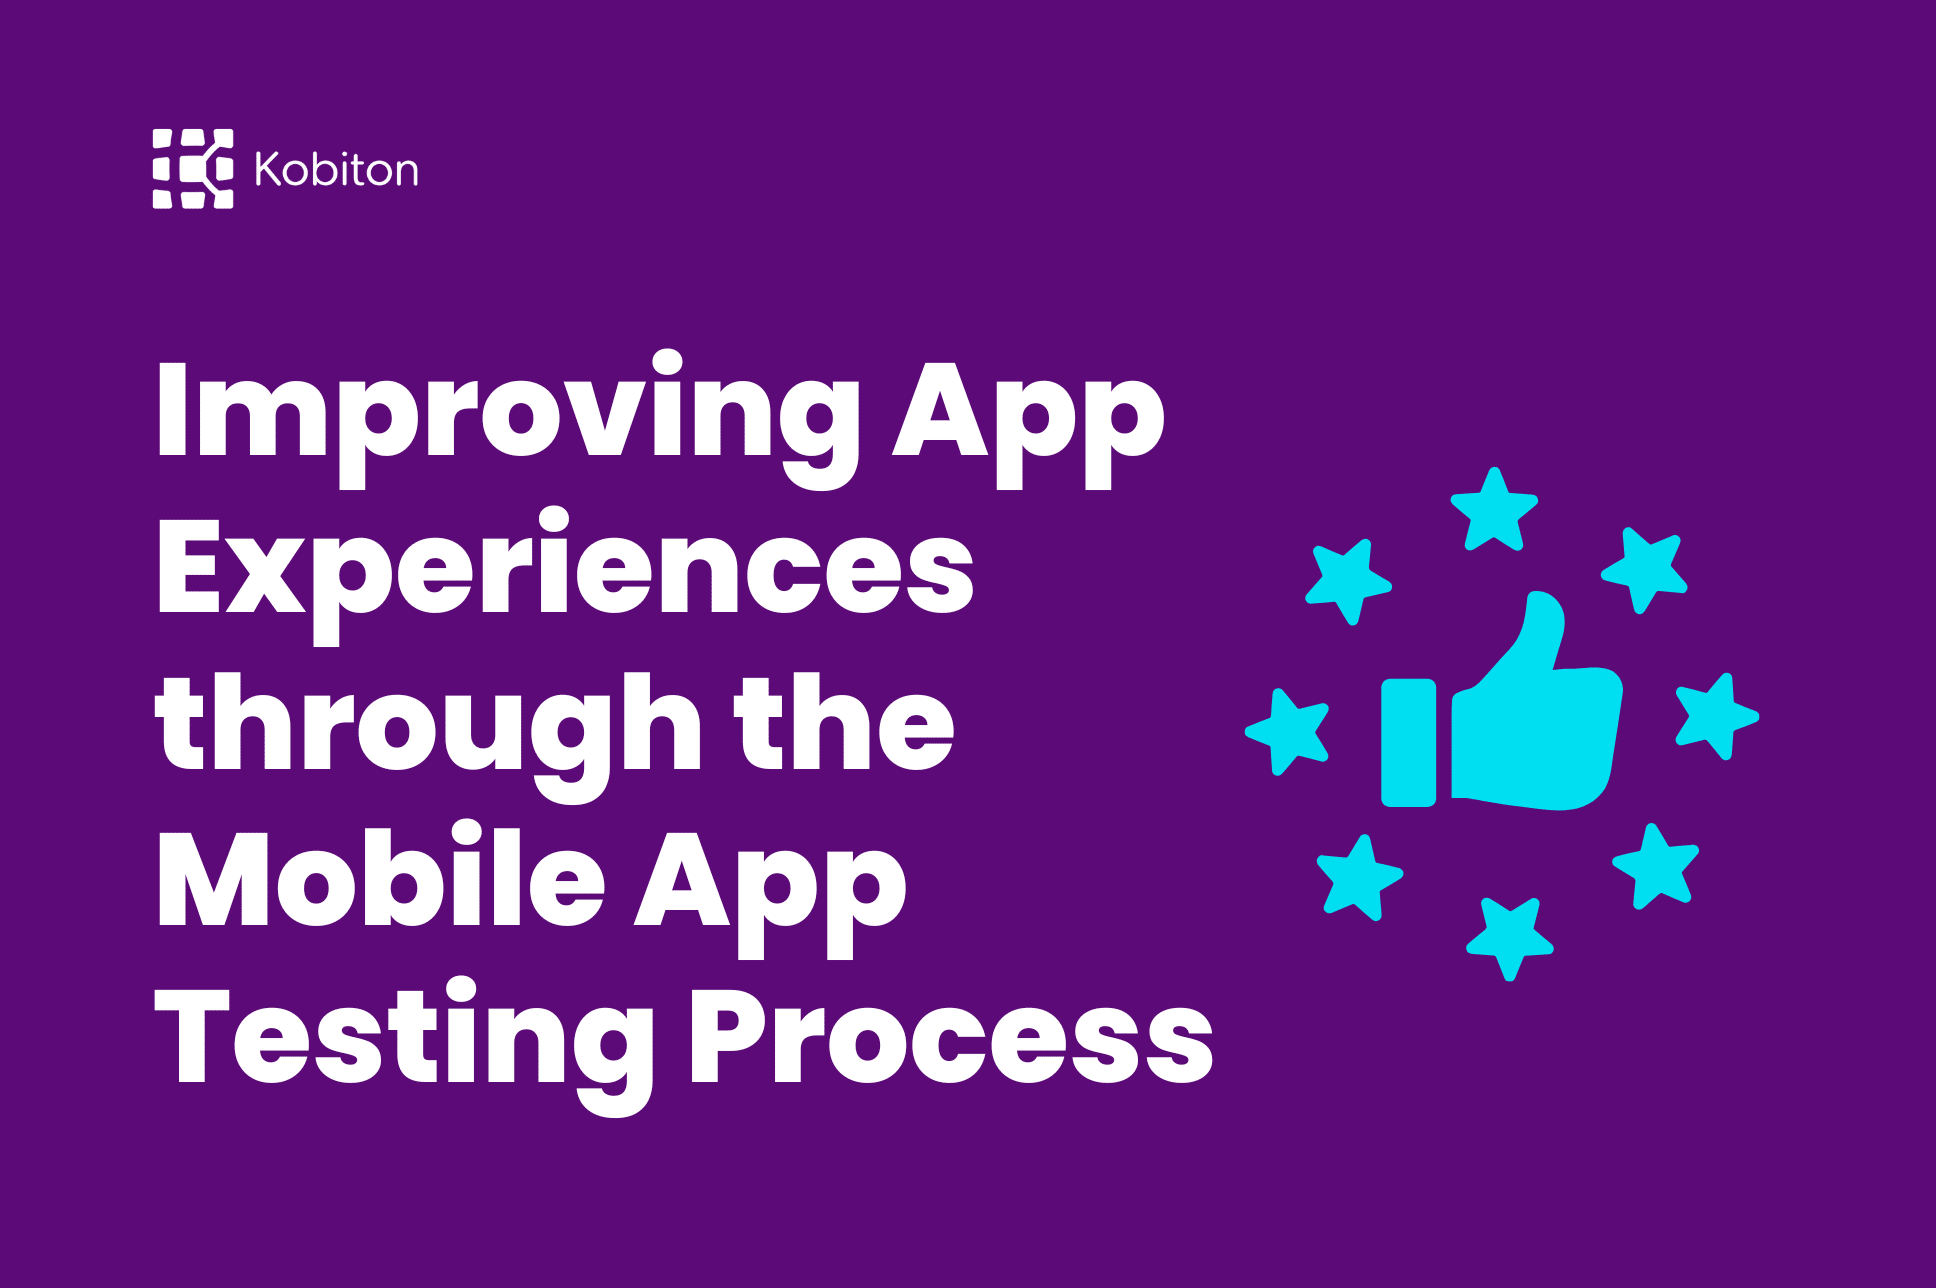 Improve App Experiences through the Mobile App Testing Process